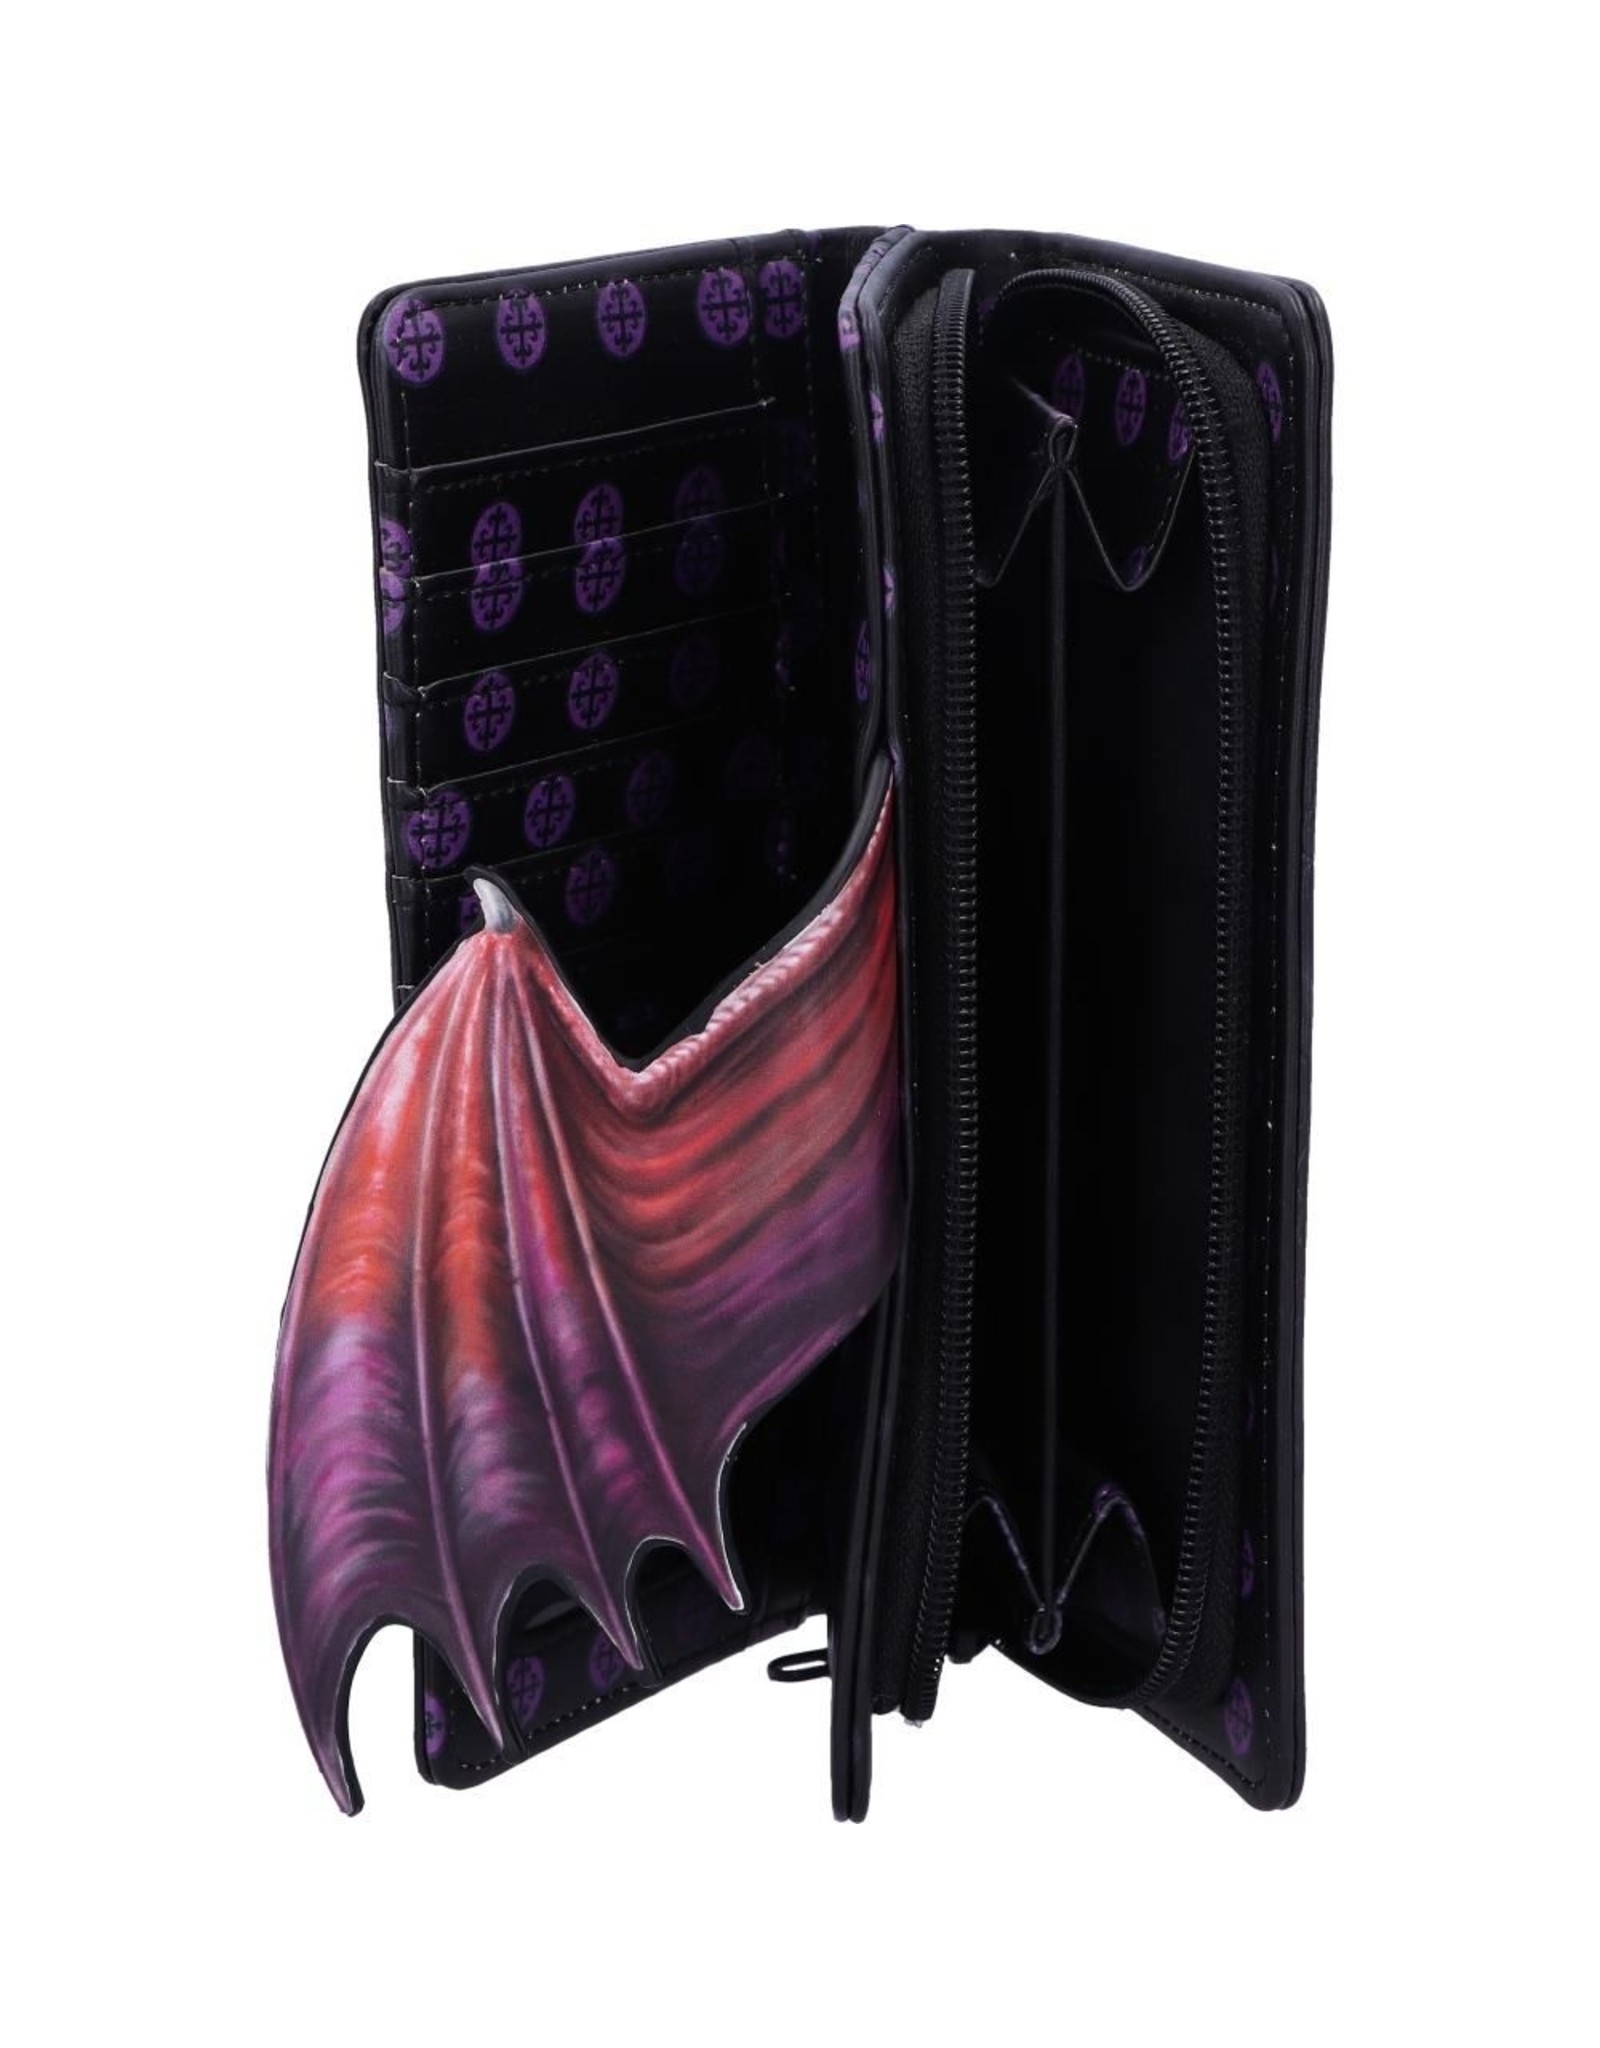 NemesisNow Fantasy wallets and purses - Embossed Purse Take Flight  (Purple) 18.5cm